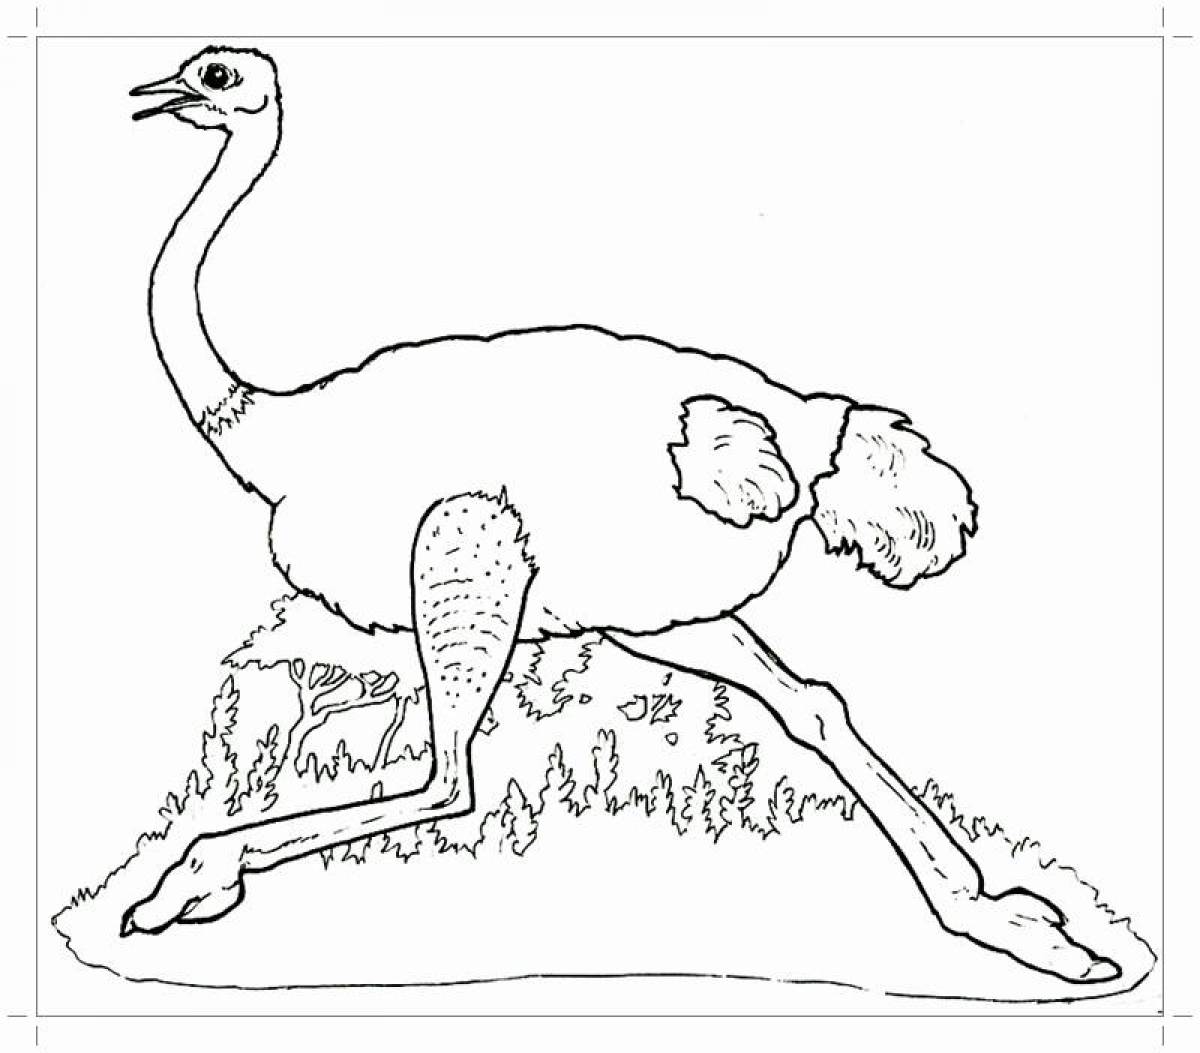 Ostrich running